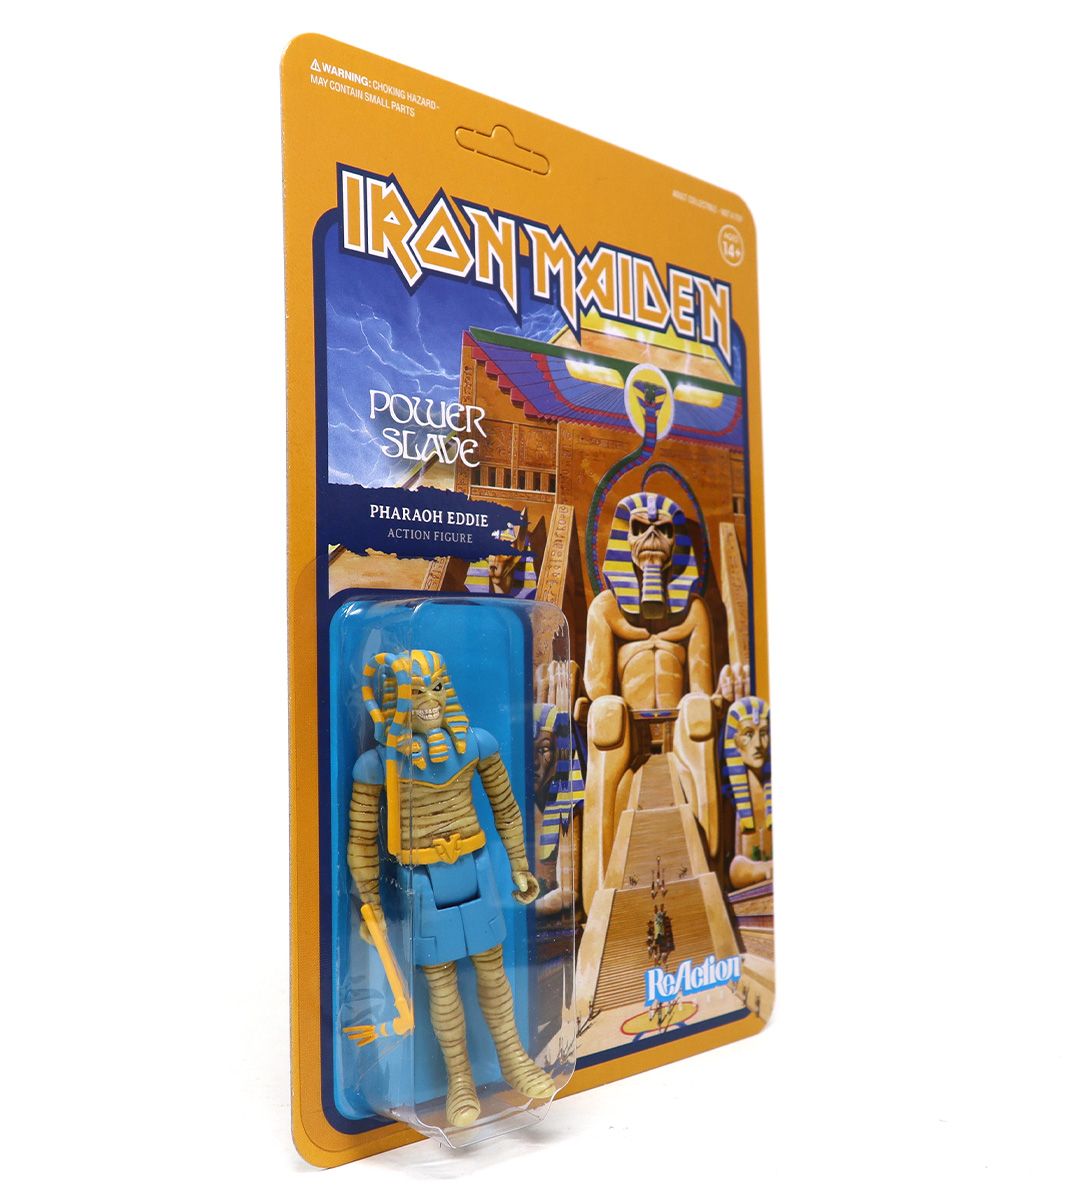 Pharaoh Eddie - Iron Maiden wave 1 - ReAction figure